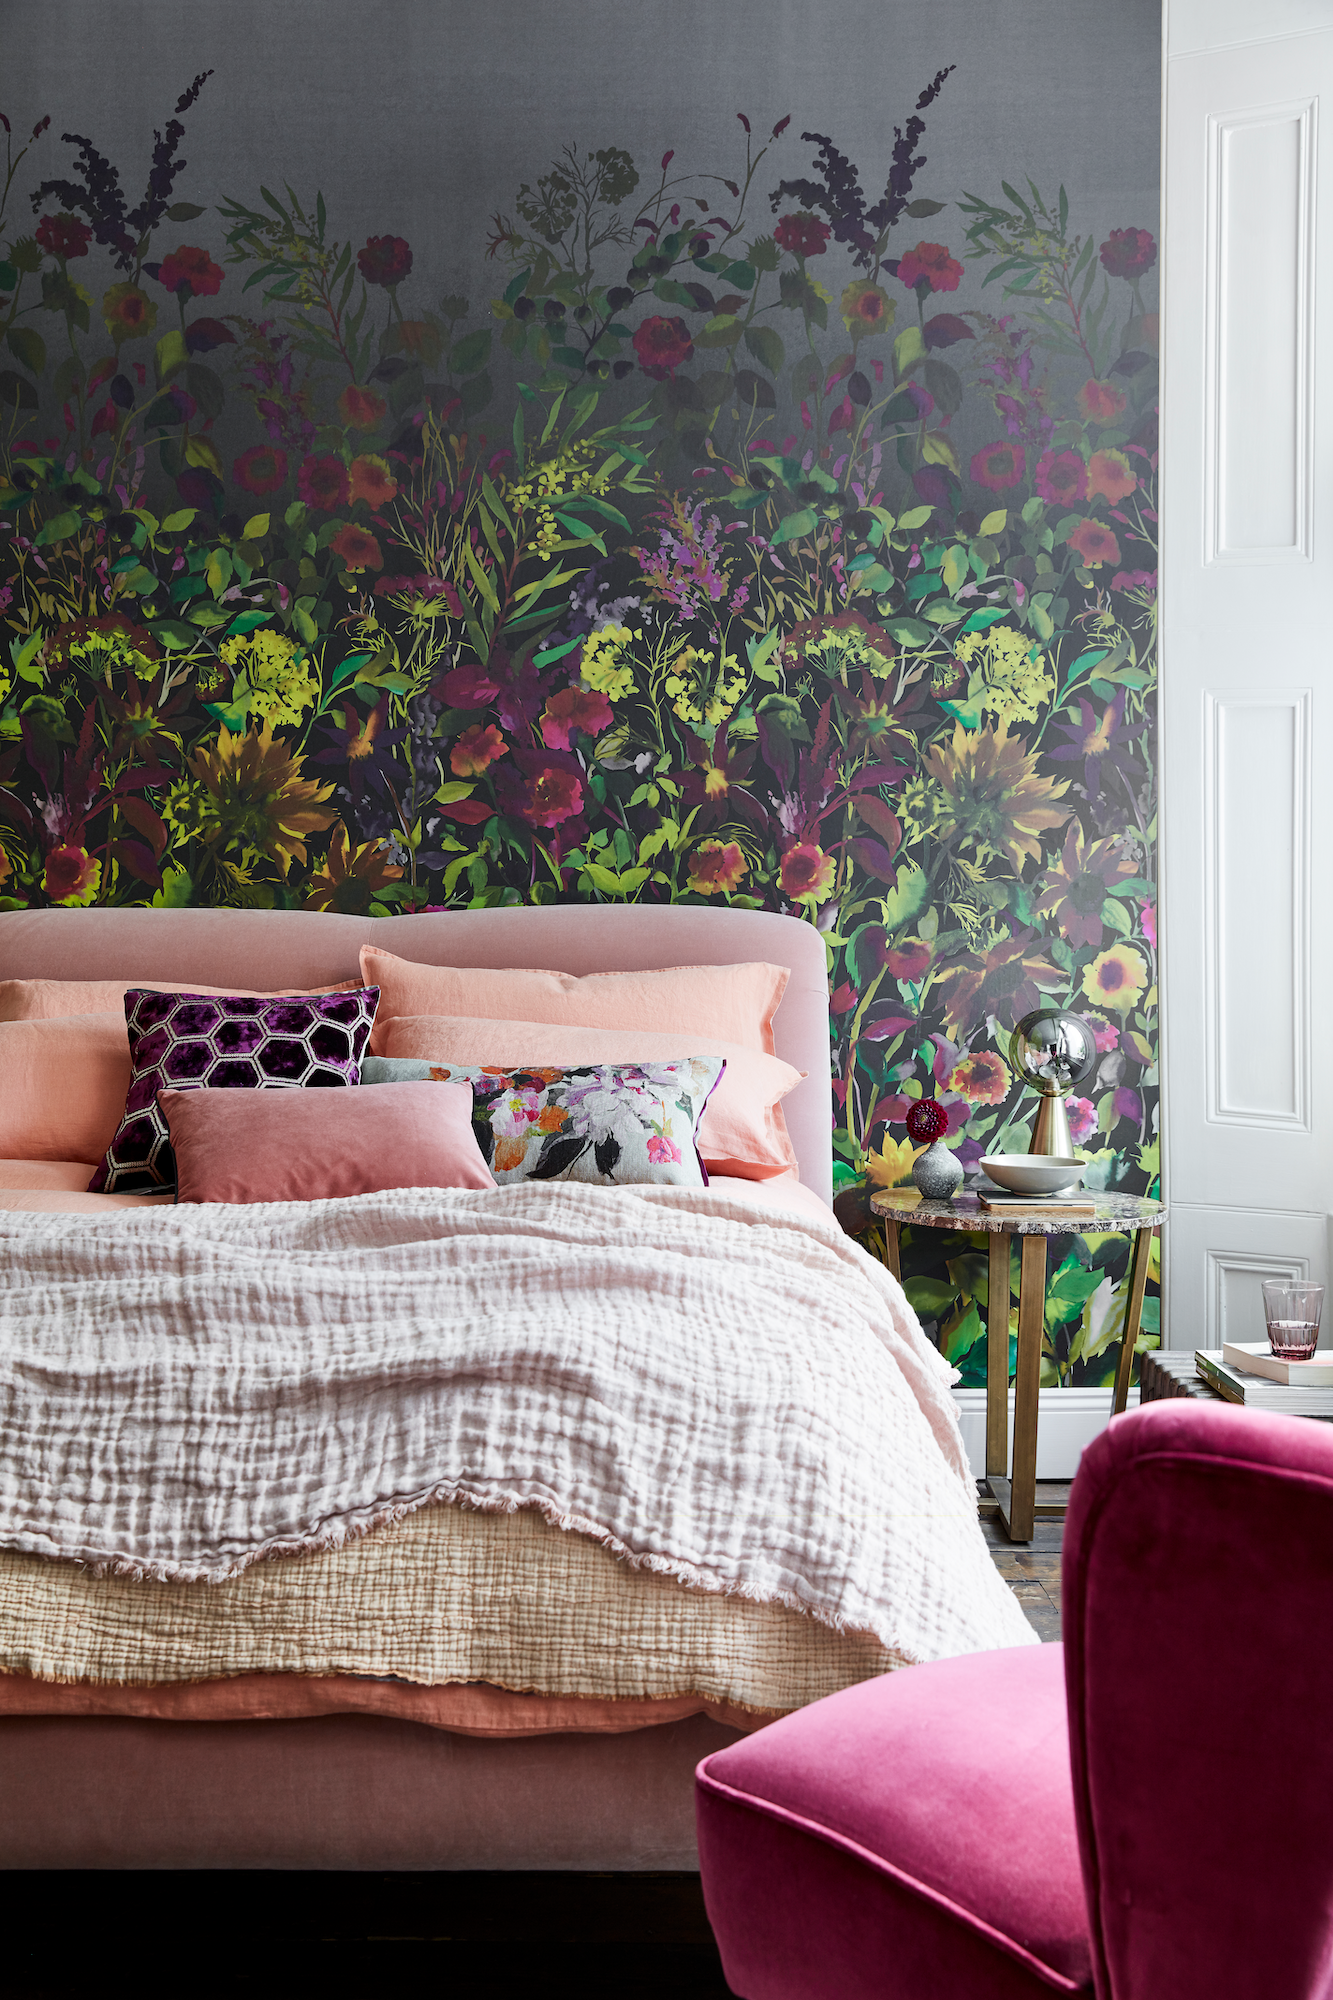 20 Cute Spring Wallpaper for Phone & iPhone : Rose Wallpaper 1 - Fab Mood